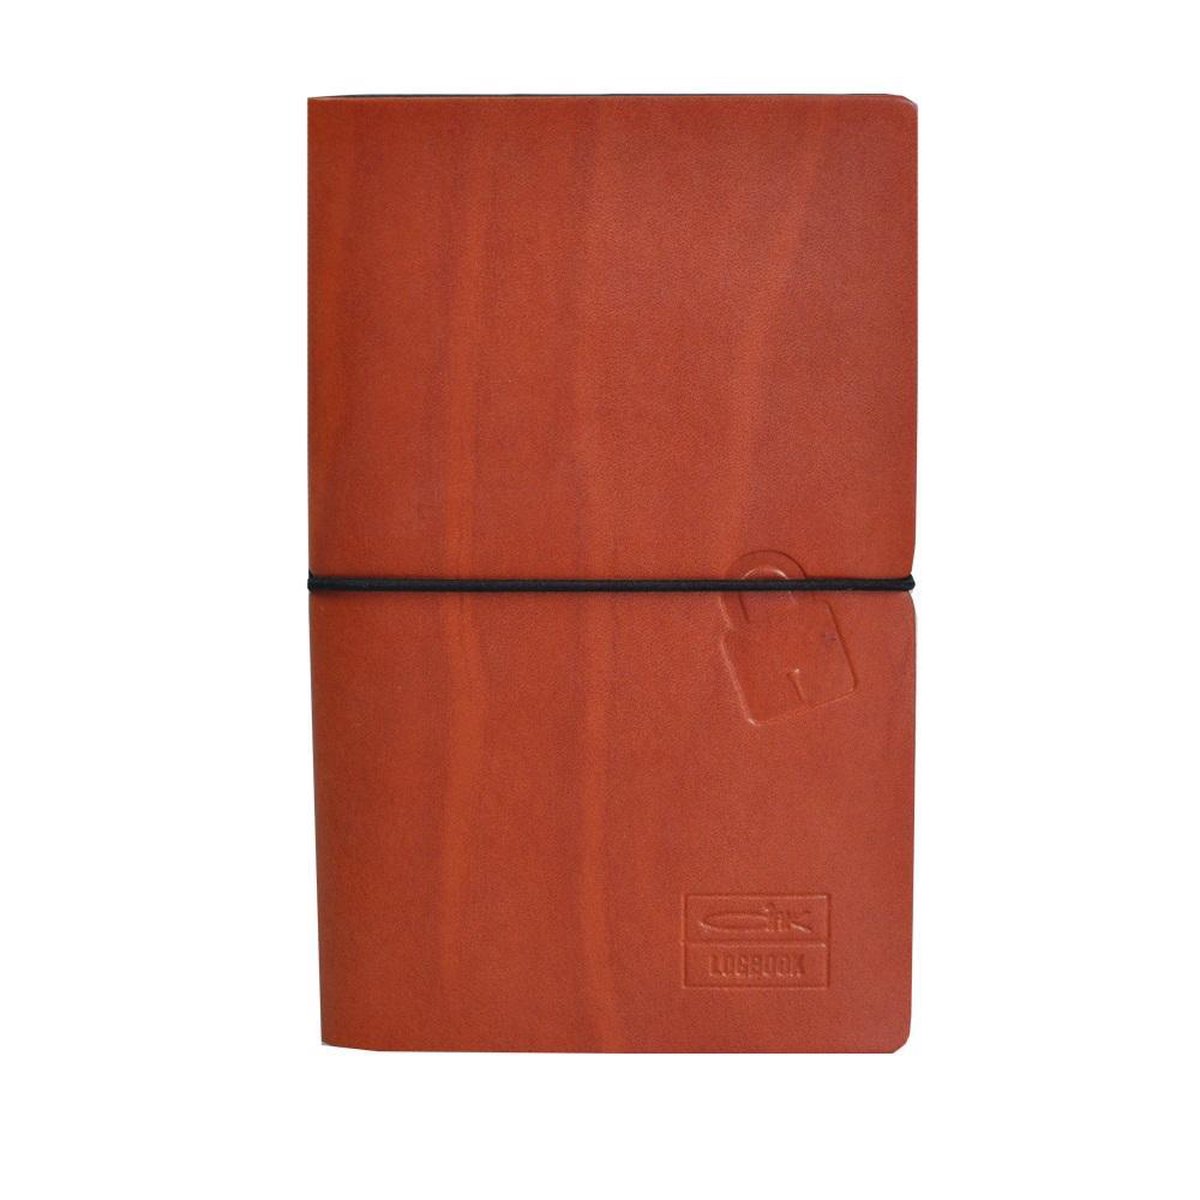 CIAK Wachtwoorden logboek - premium vegan leather - oranje